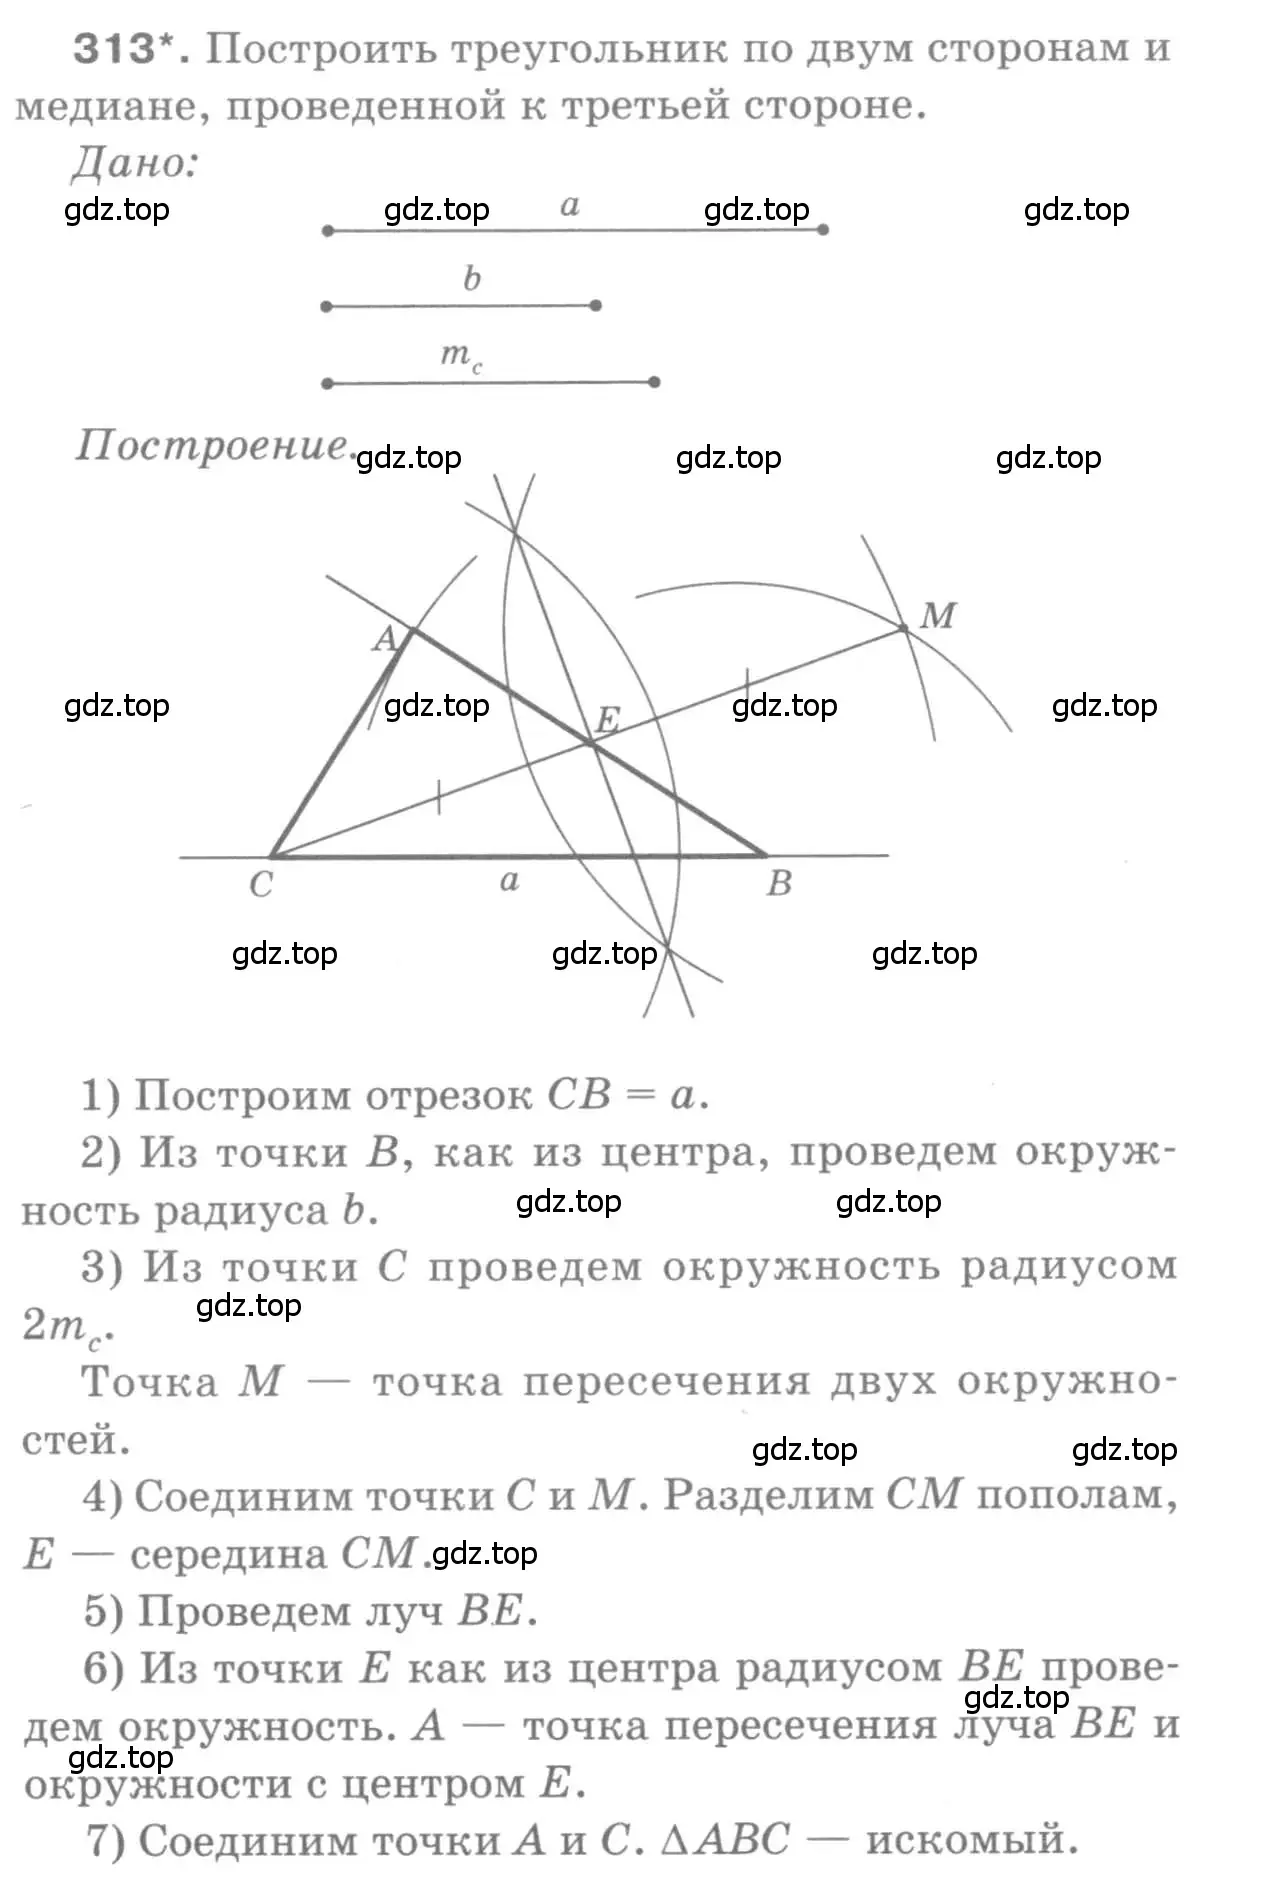 Решение 9. номер 313 (страница 90) гдз по геометрии 7-9 класс Атанасян, Бутузов, учебник